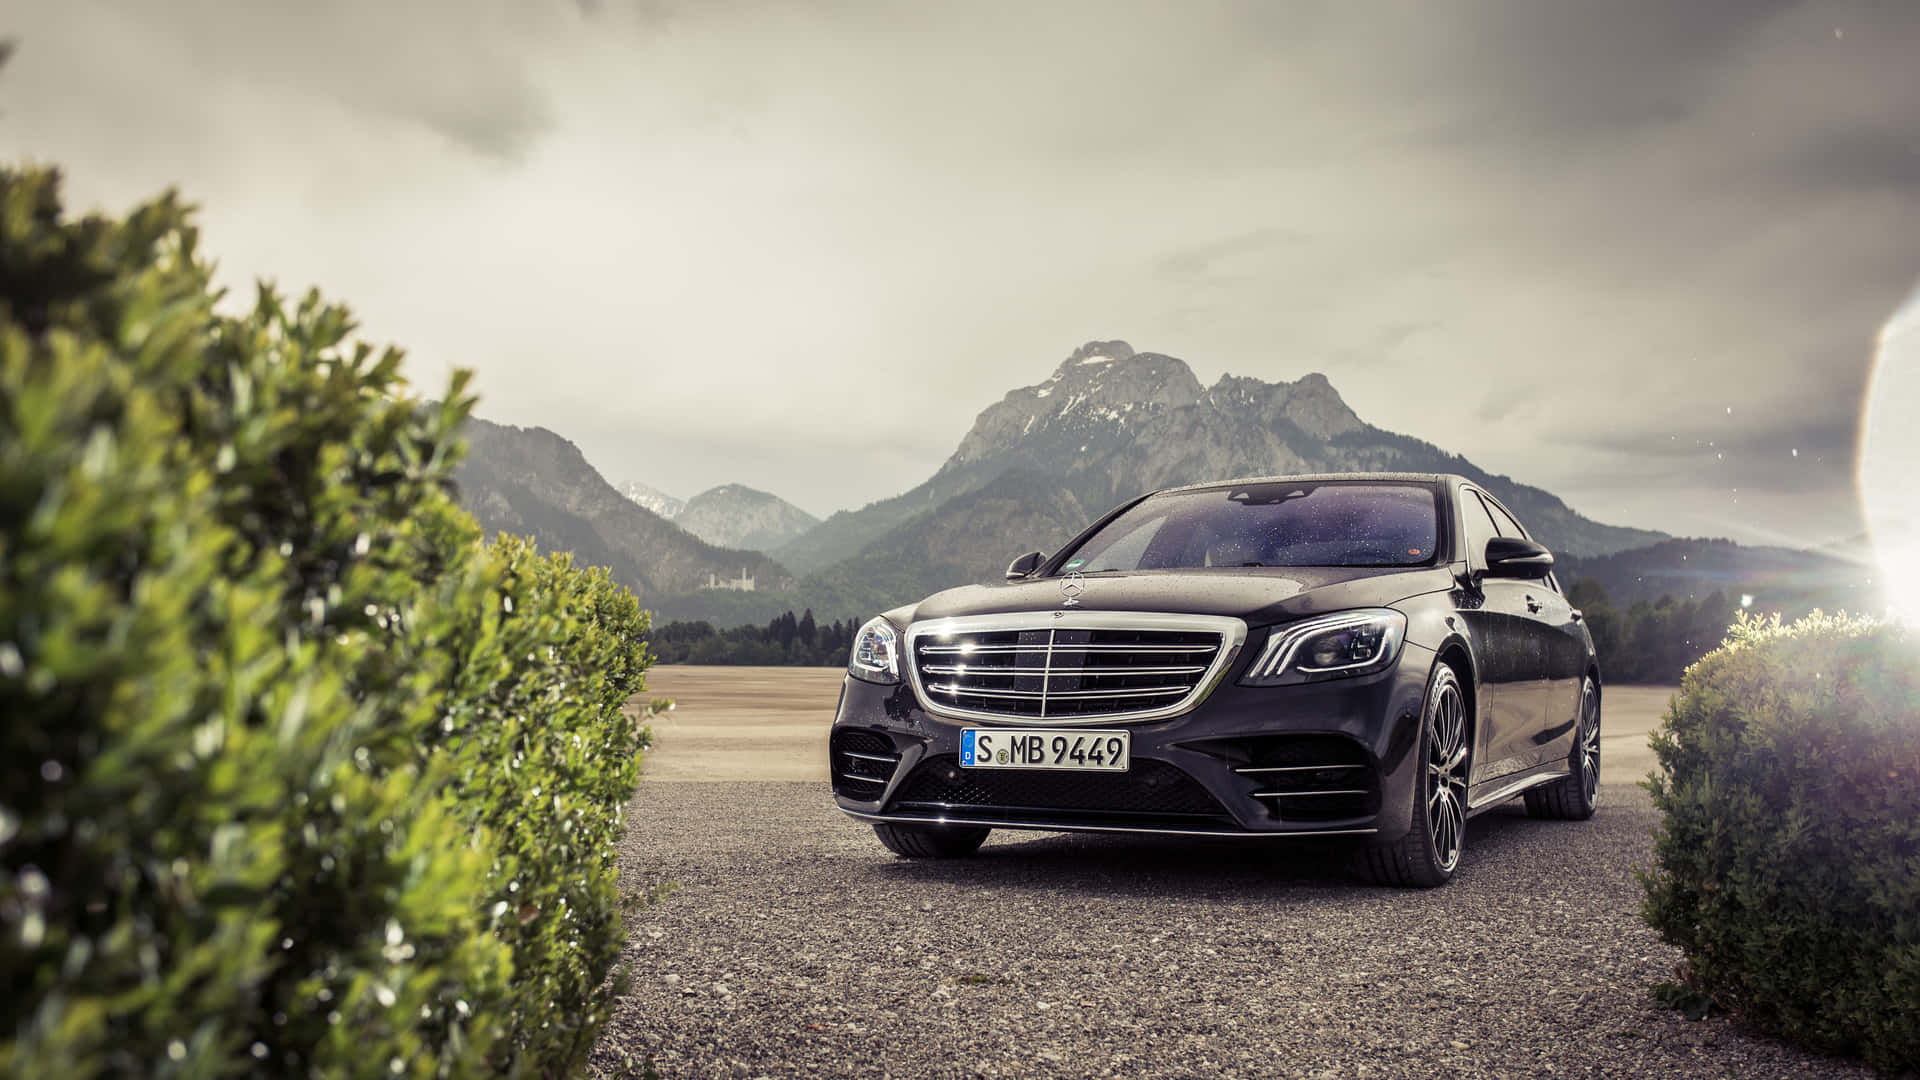 Stunning 4K Mercedes-Benz Wallpaper Showcasing Luxury and Performance